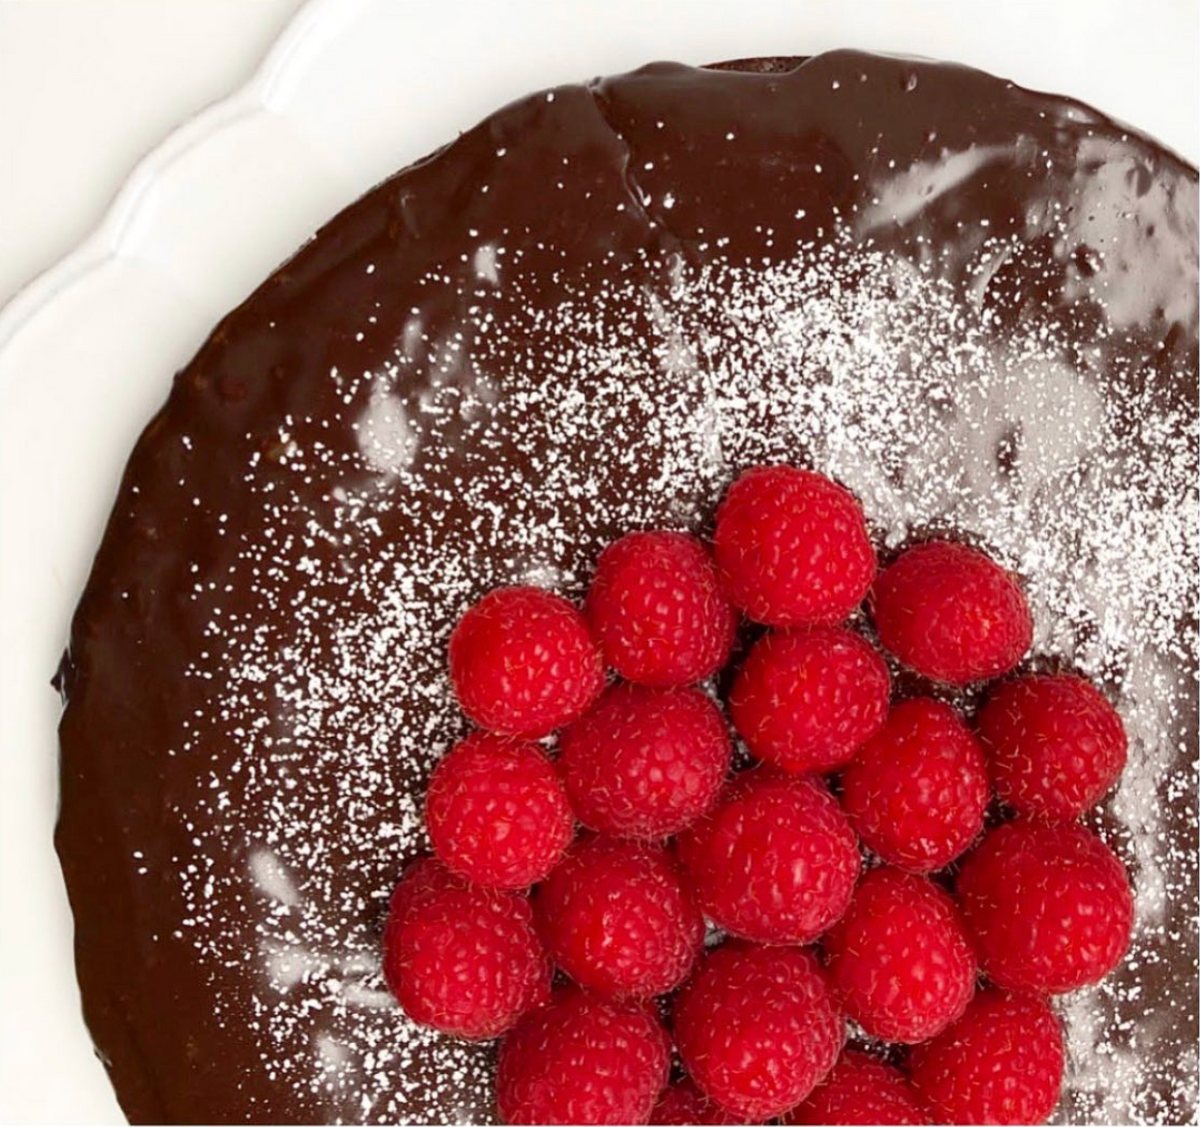 Flourless chocolate cake with raspberries